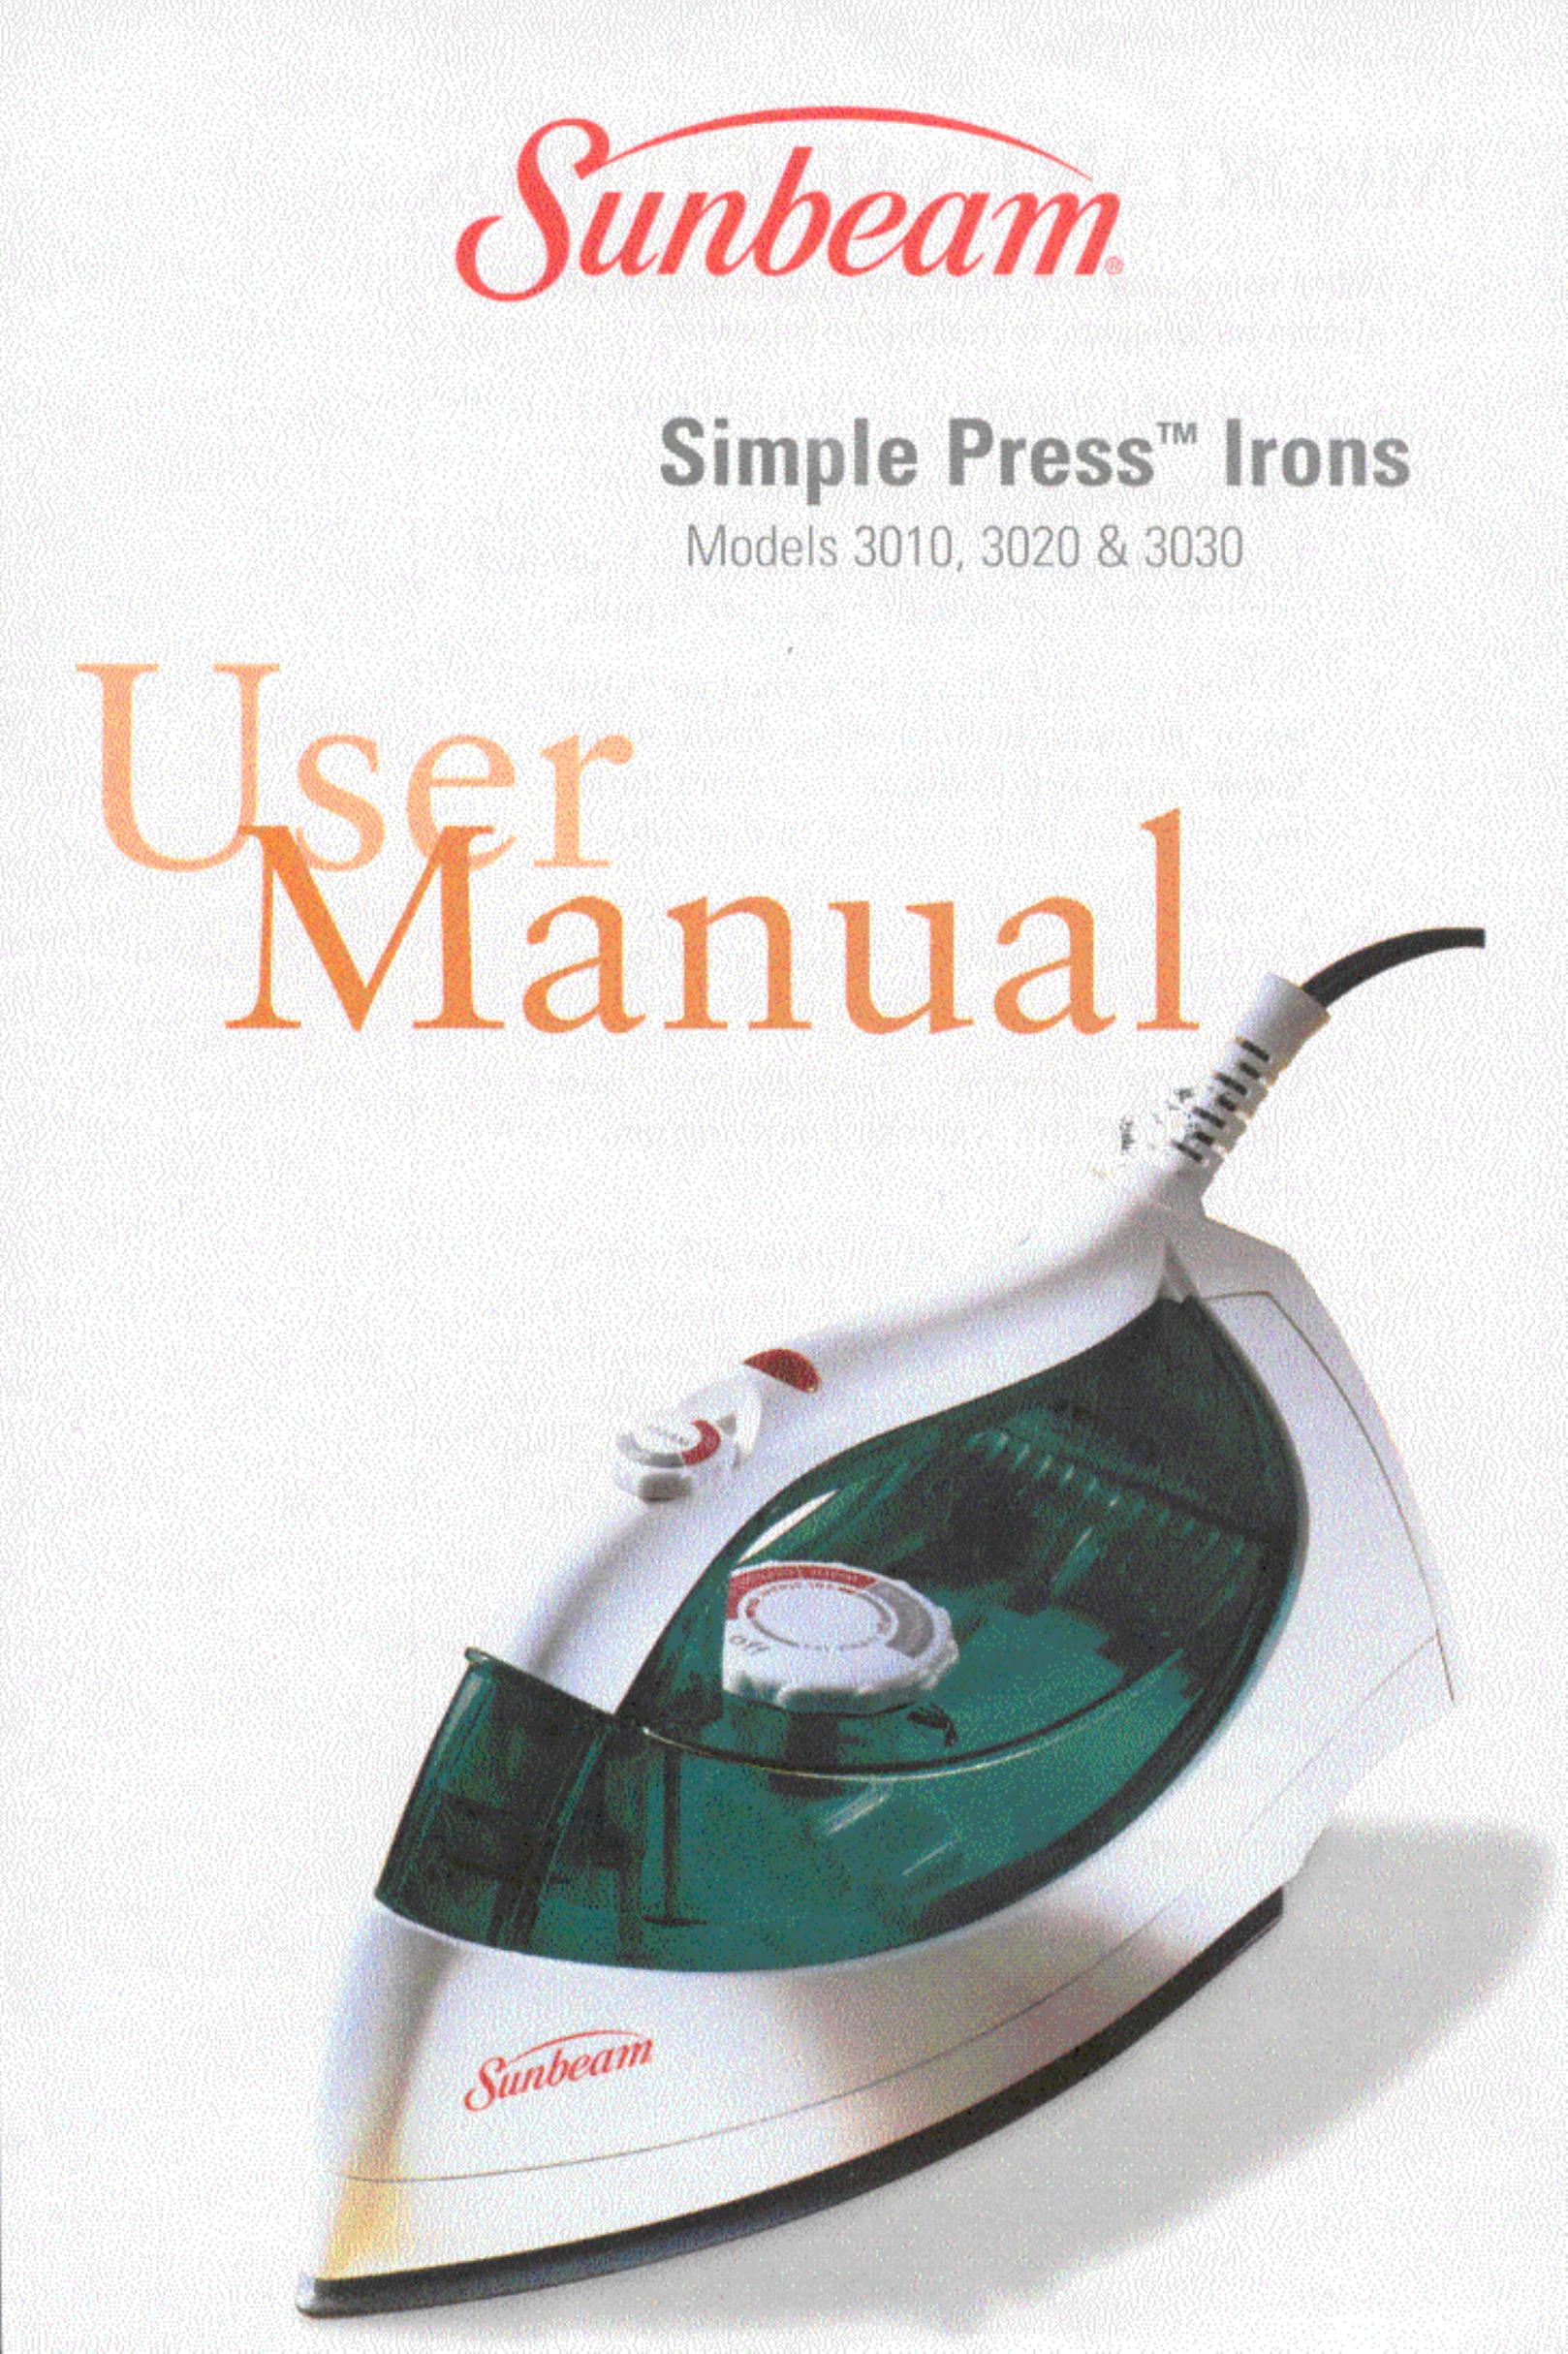 Sunbeam 3010 Iron User Manual